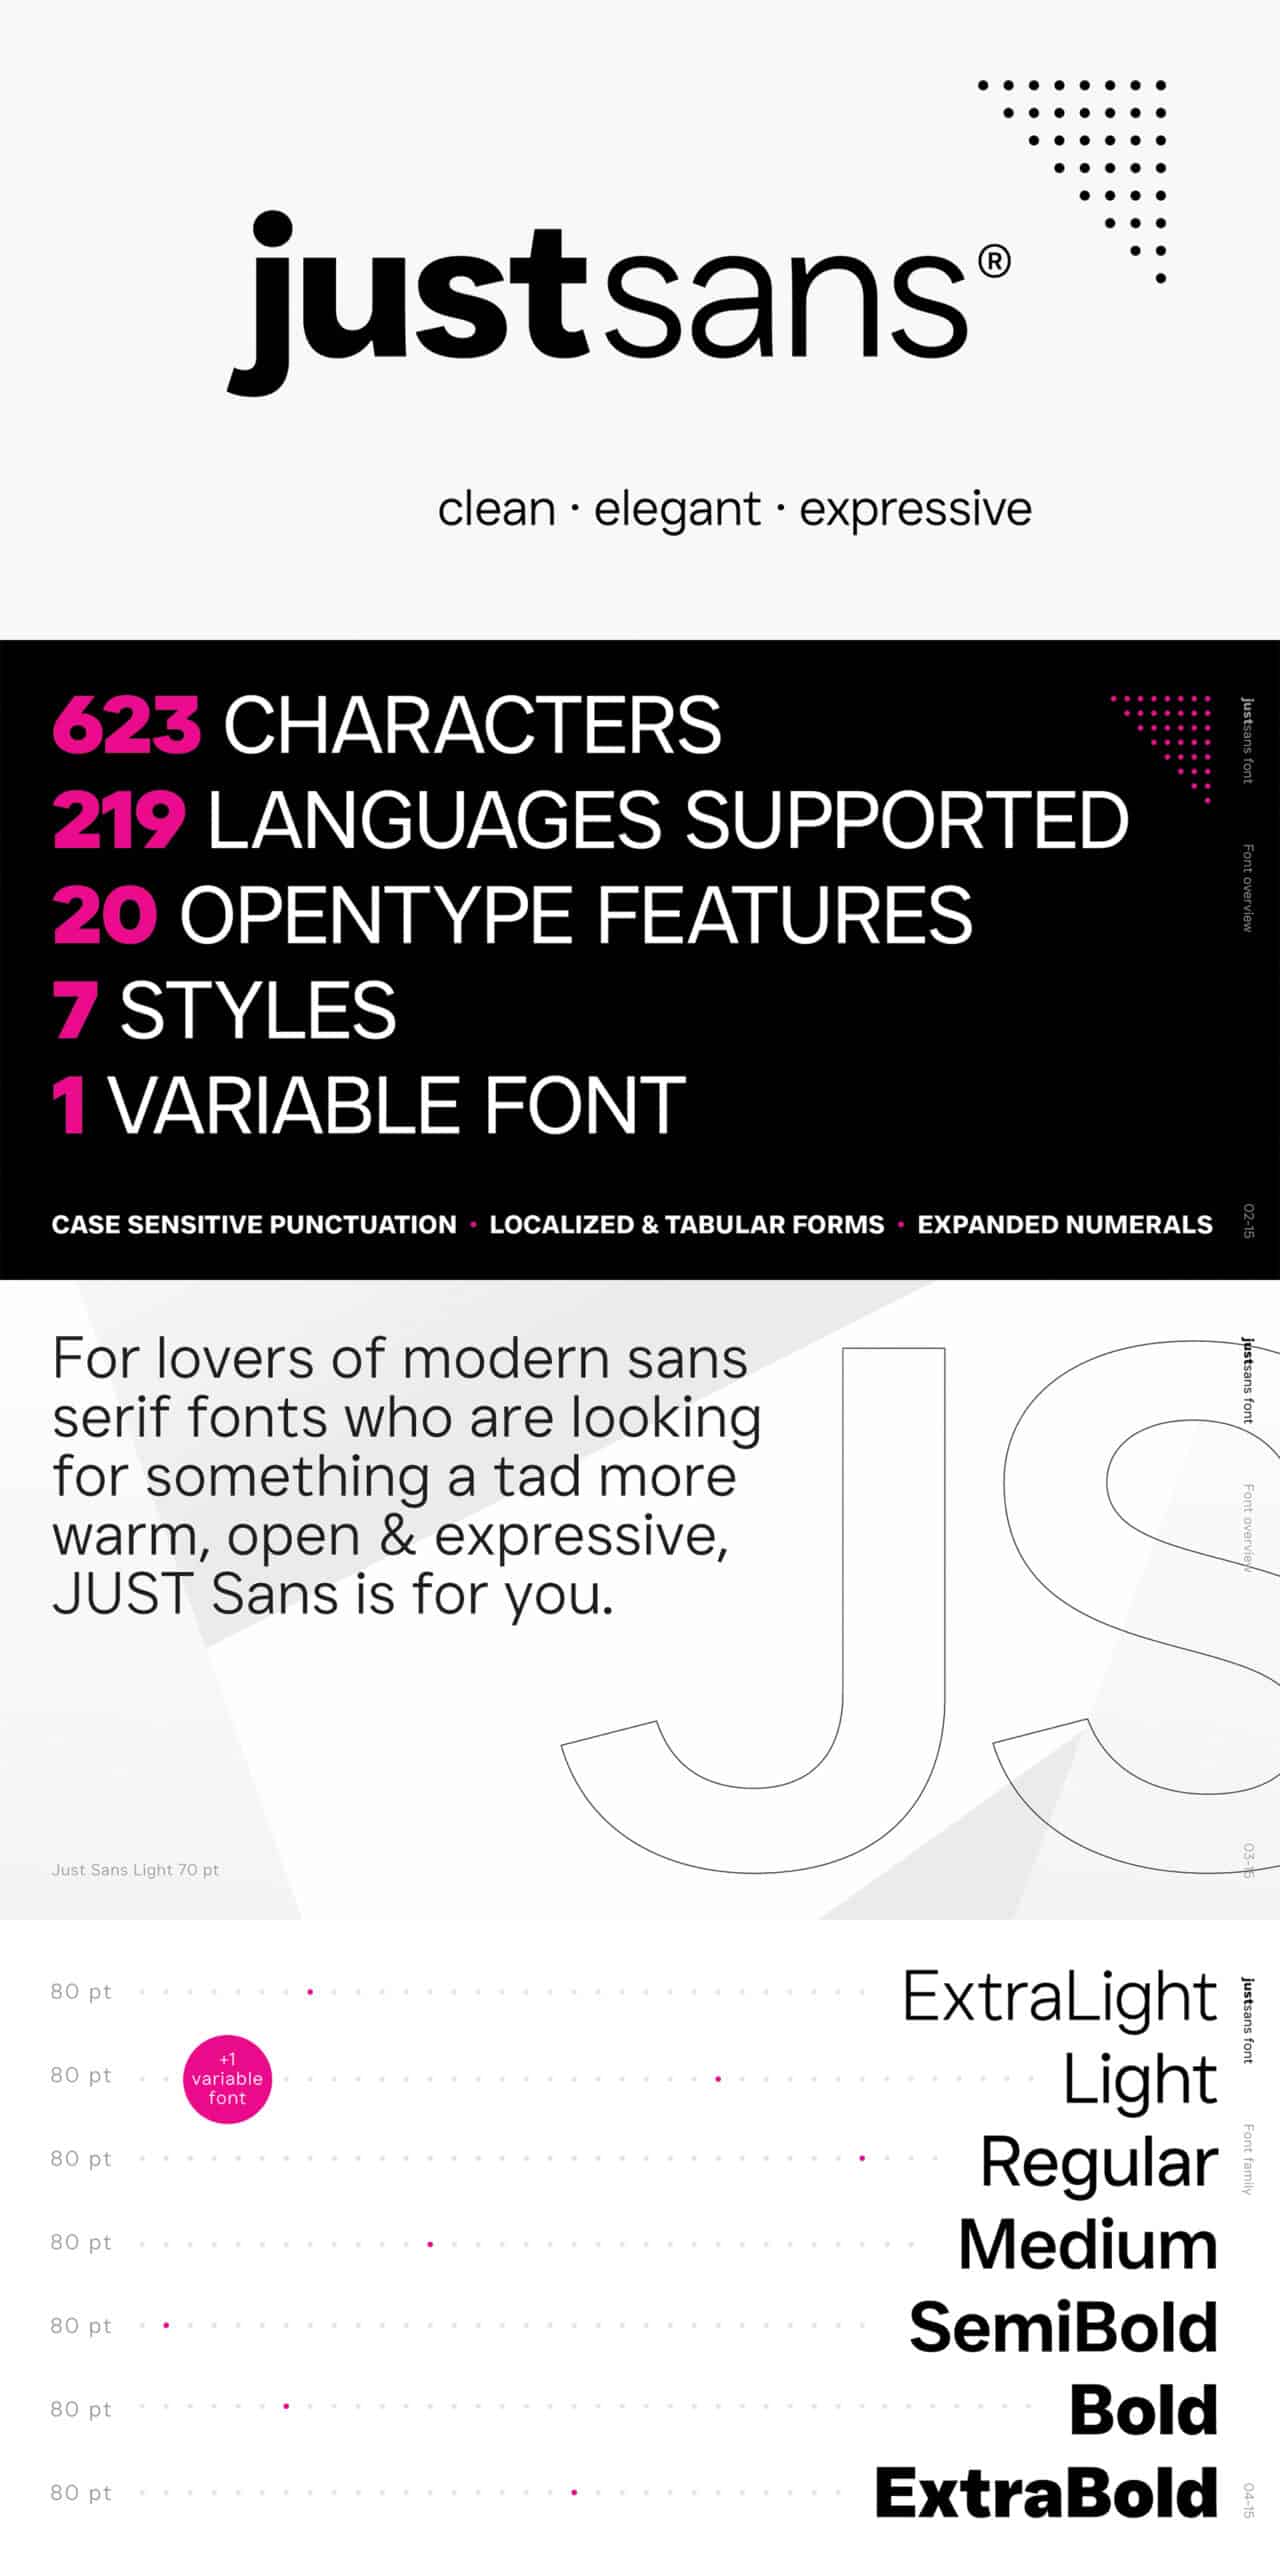 Just Sans® Clean Modern Minimal Geometric Typeface - FREE FONT